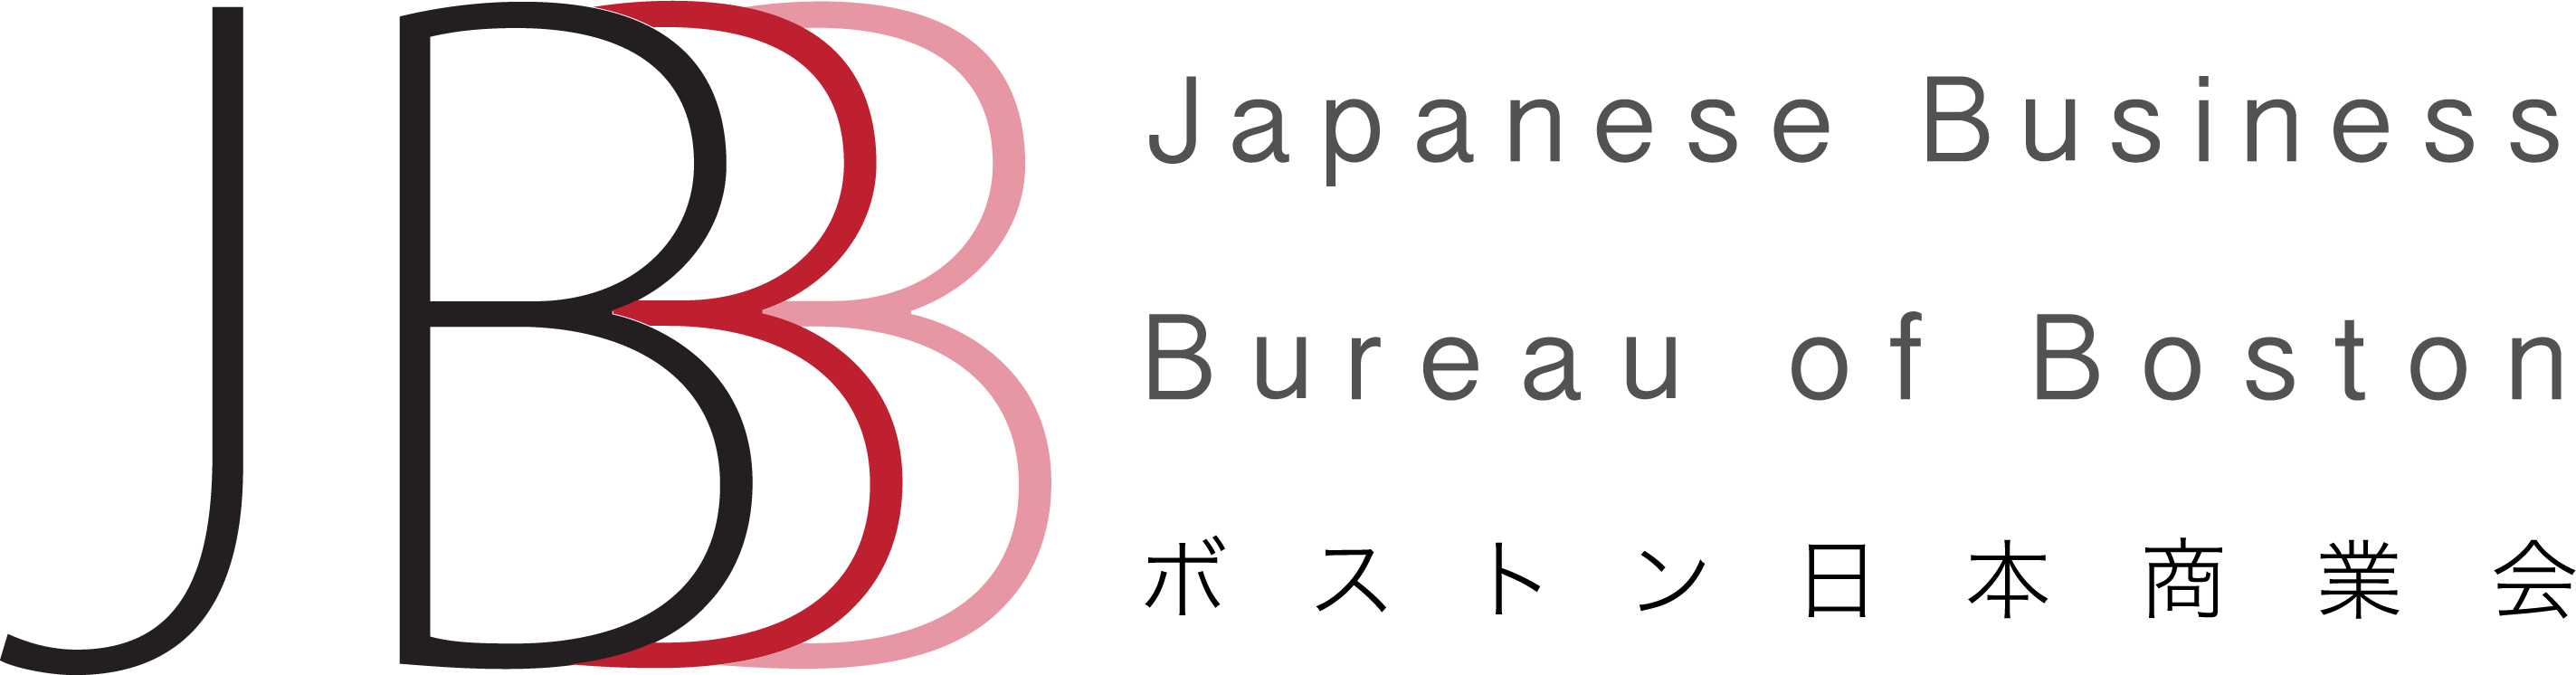 Japanese Business Bureau of Boston